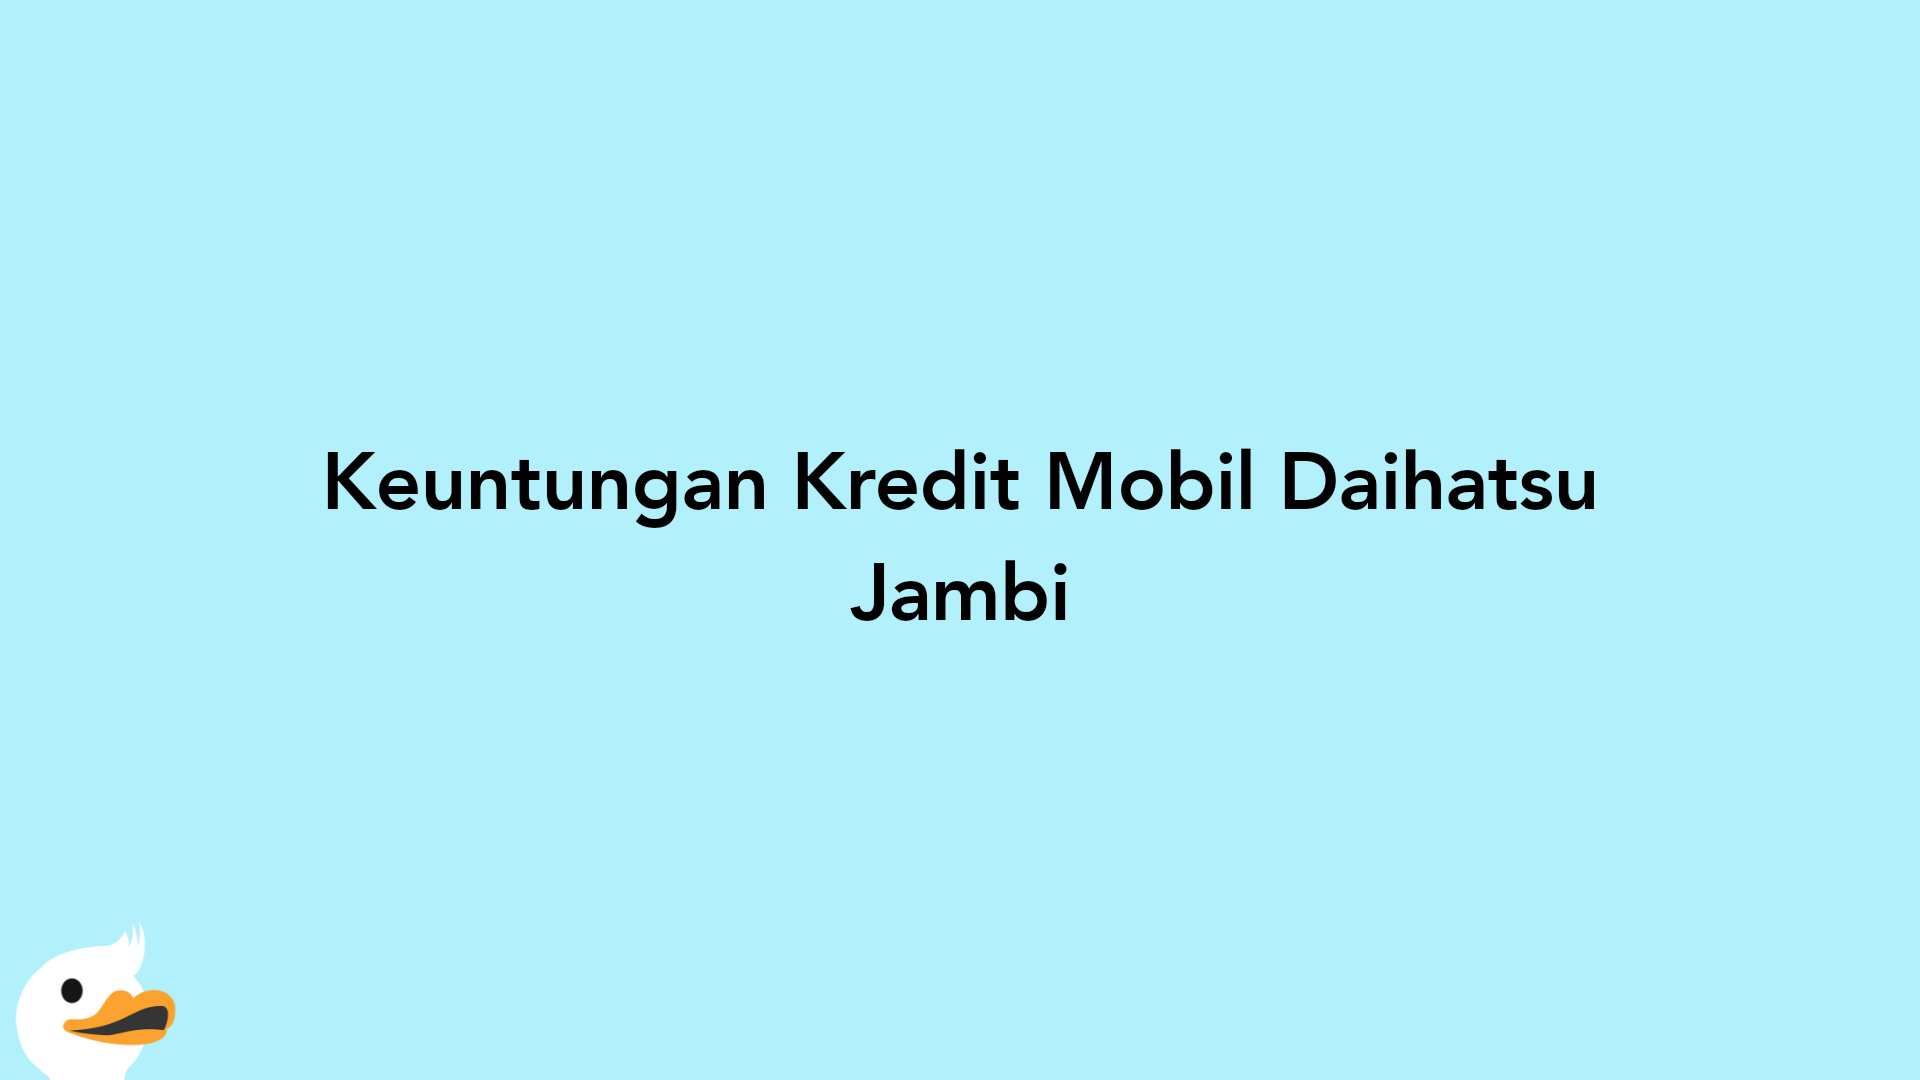 Keuntungan Kredit Mobil Daihatsu Jambi